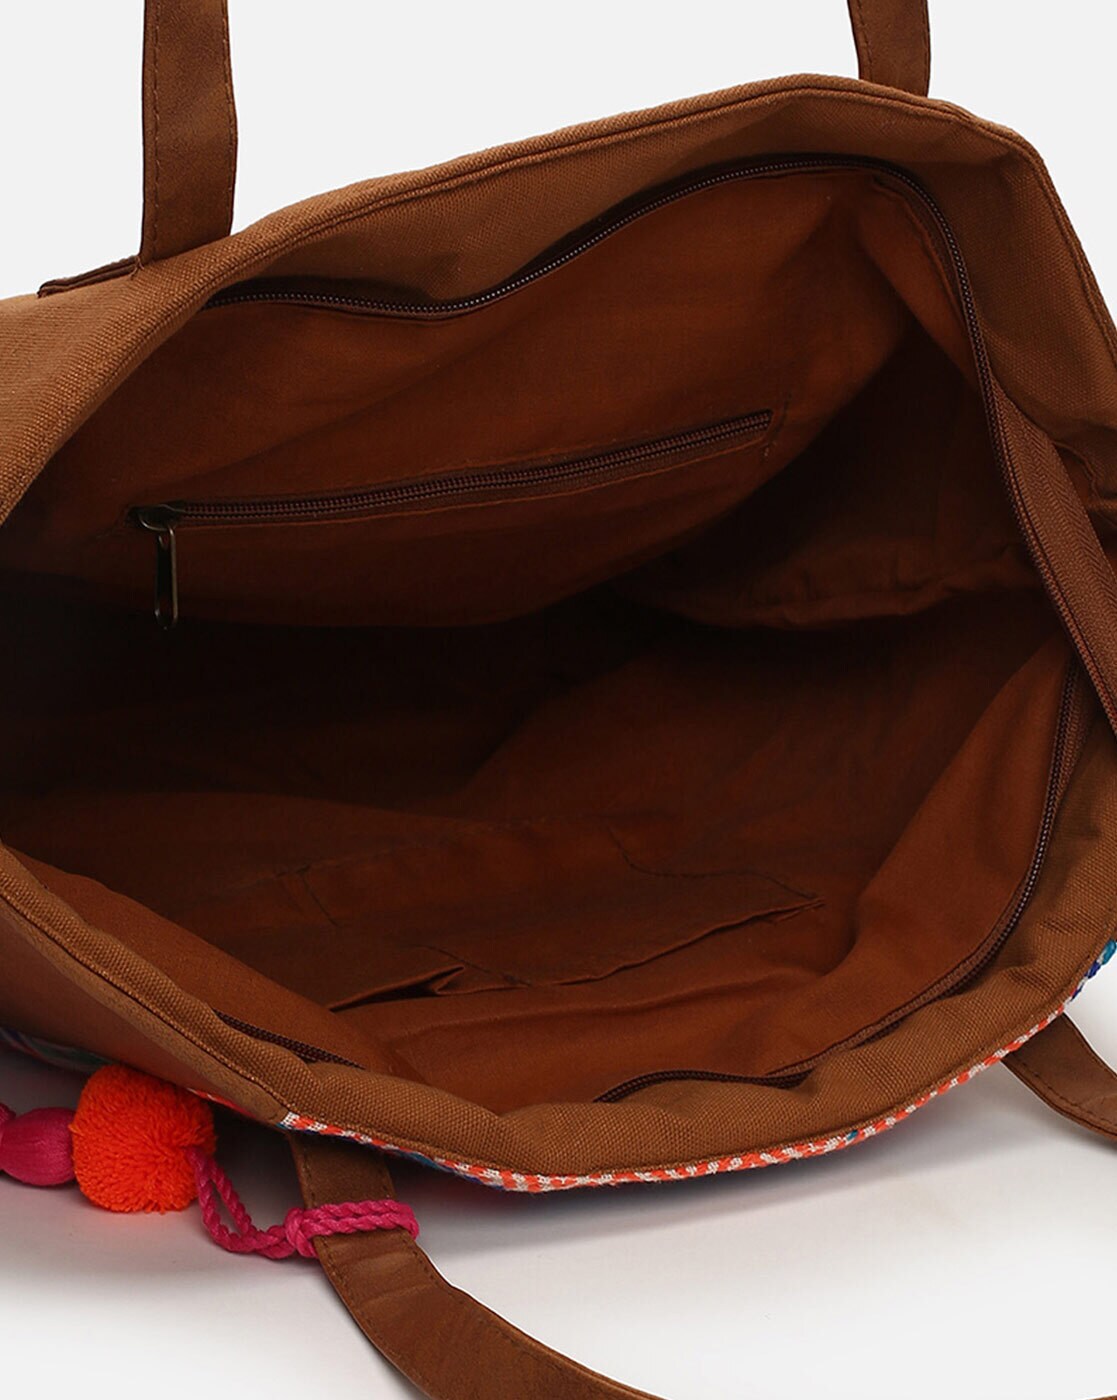 Buy Black Handbags for Women by Accessorize London Online | Ajio.com